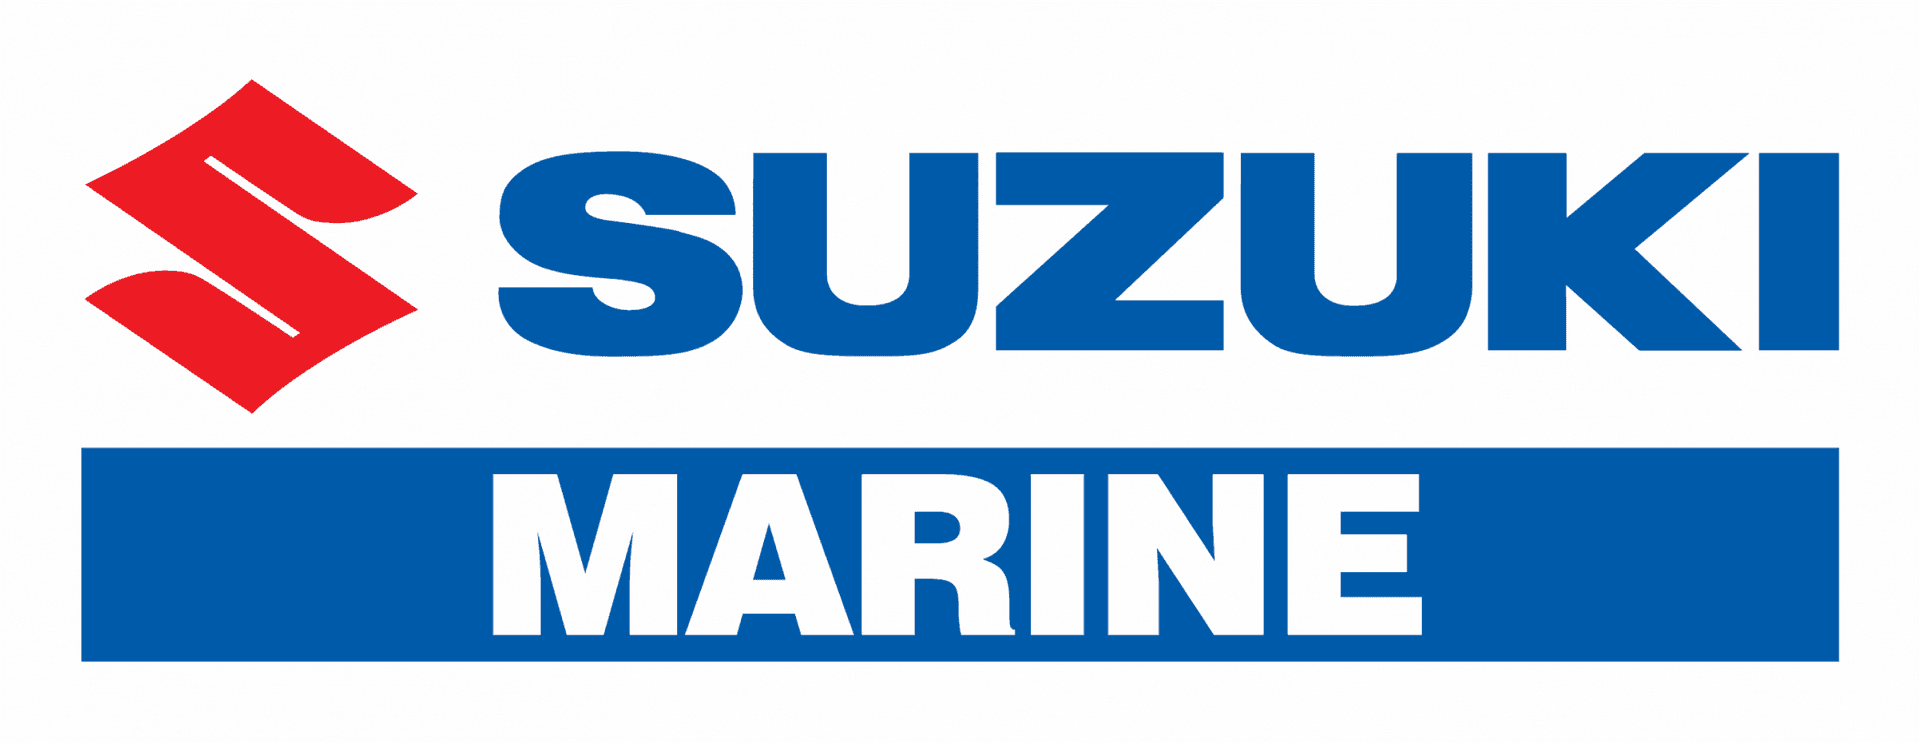 Suzuki Marine Logo PNG image